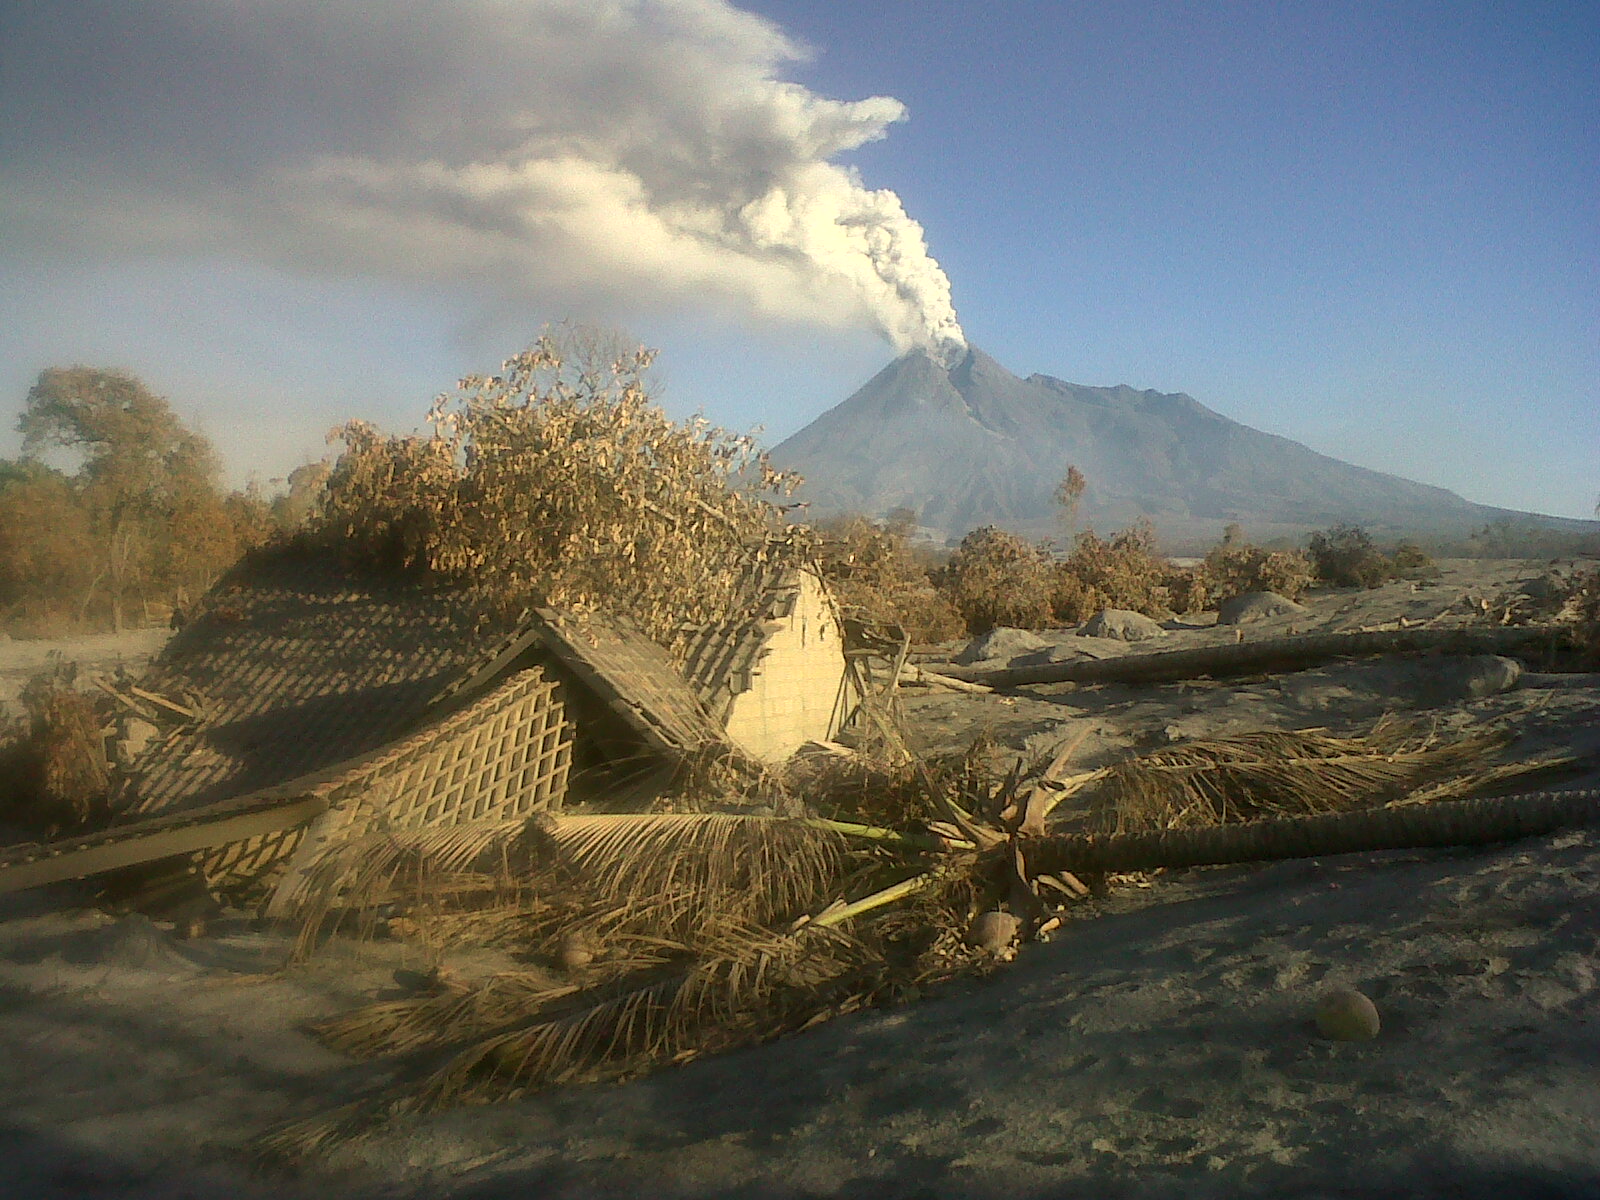 Gambar gunung merapi meletus di yogyakarta tahun 2010